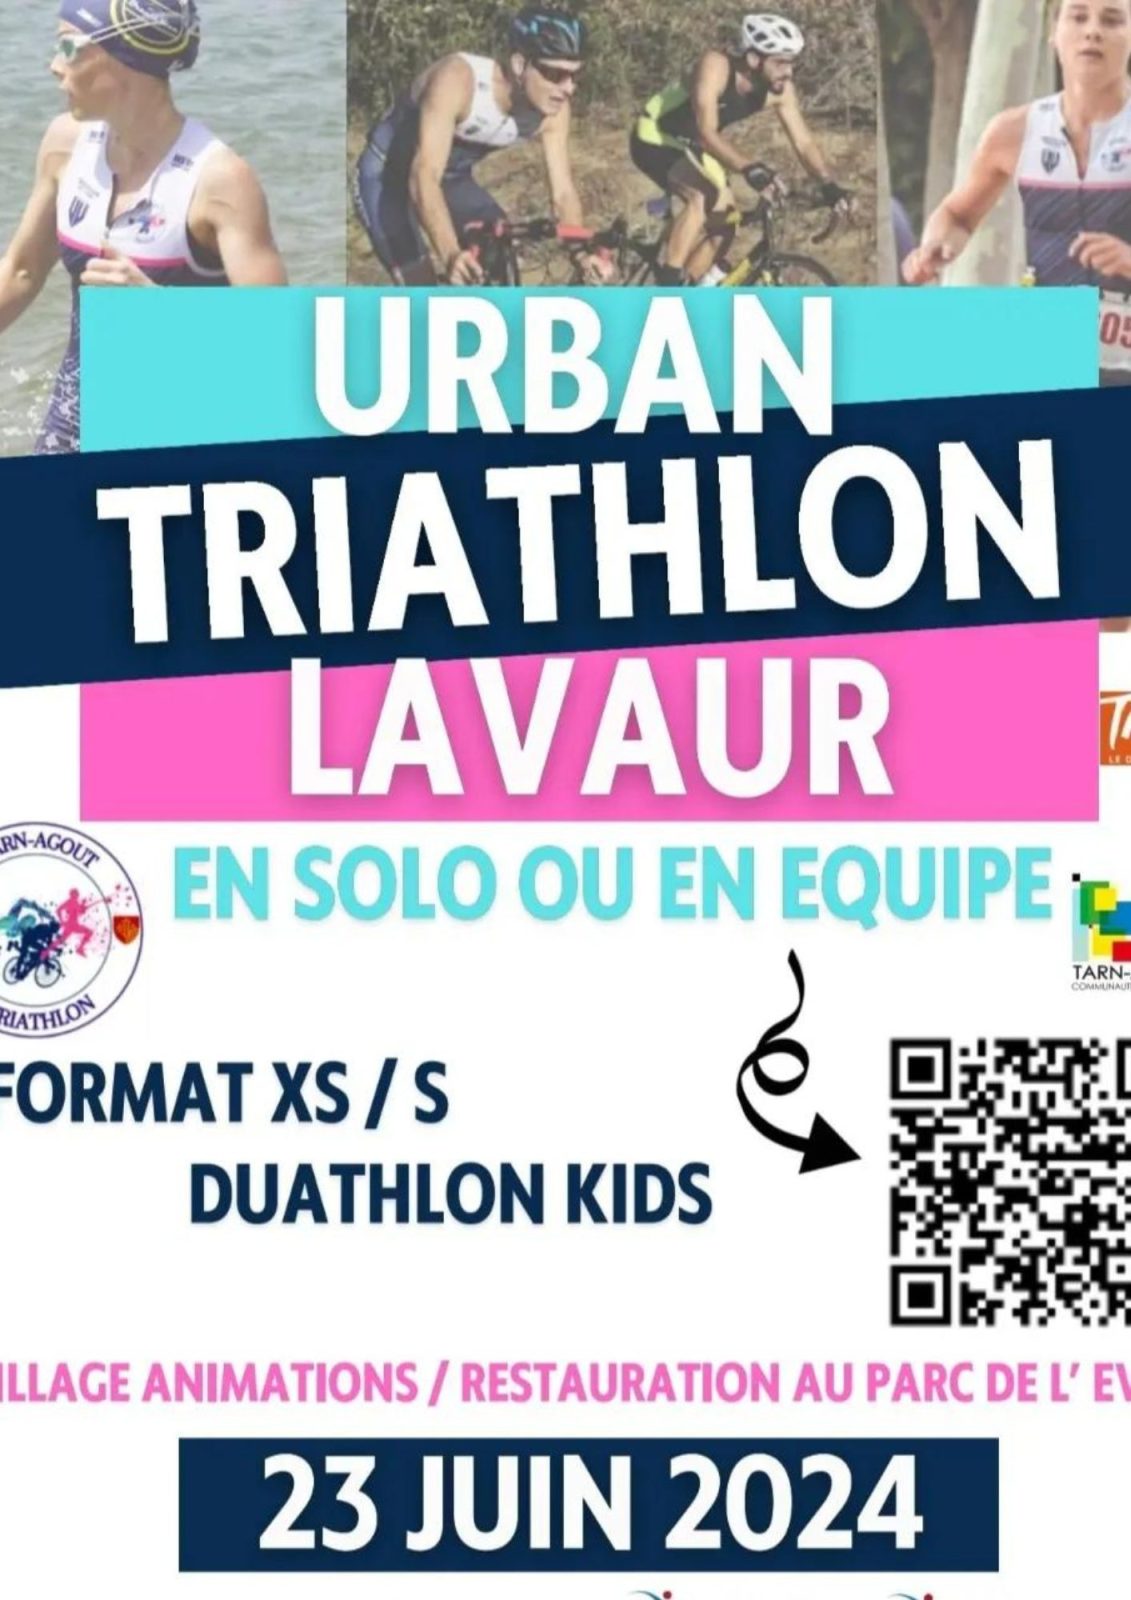 Urban triathlon Le 23 juin 2024